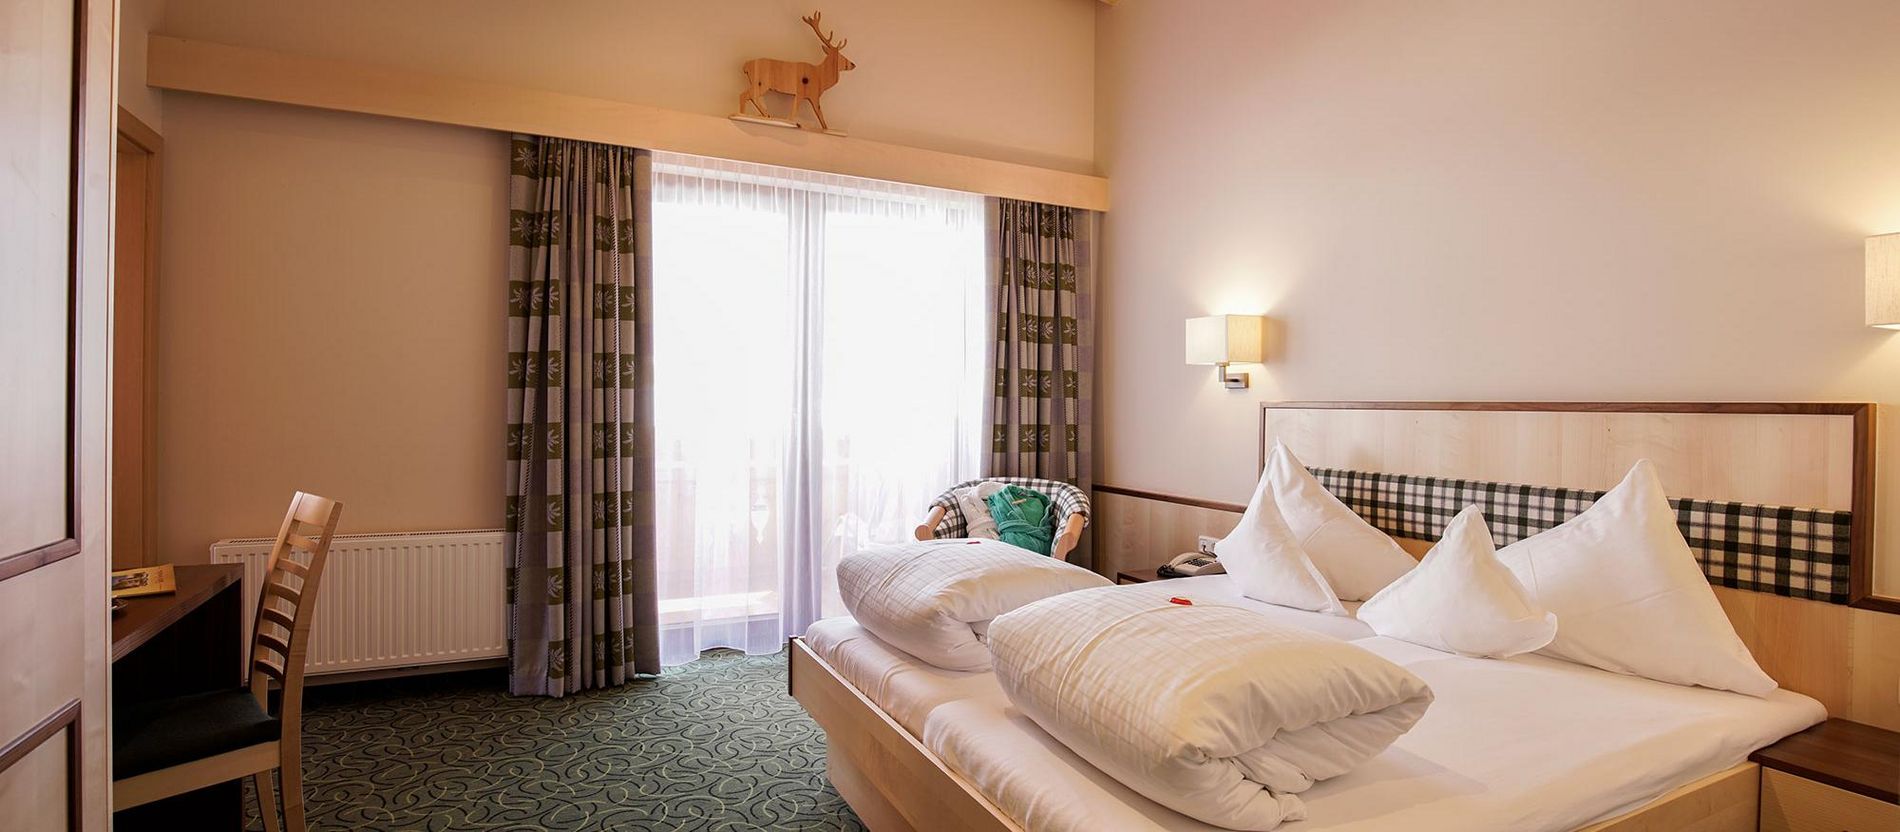 Hotel Längenfeld - Blick ins Zimmer - Rechts steht ein Bett